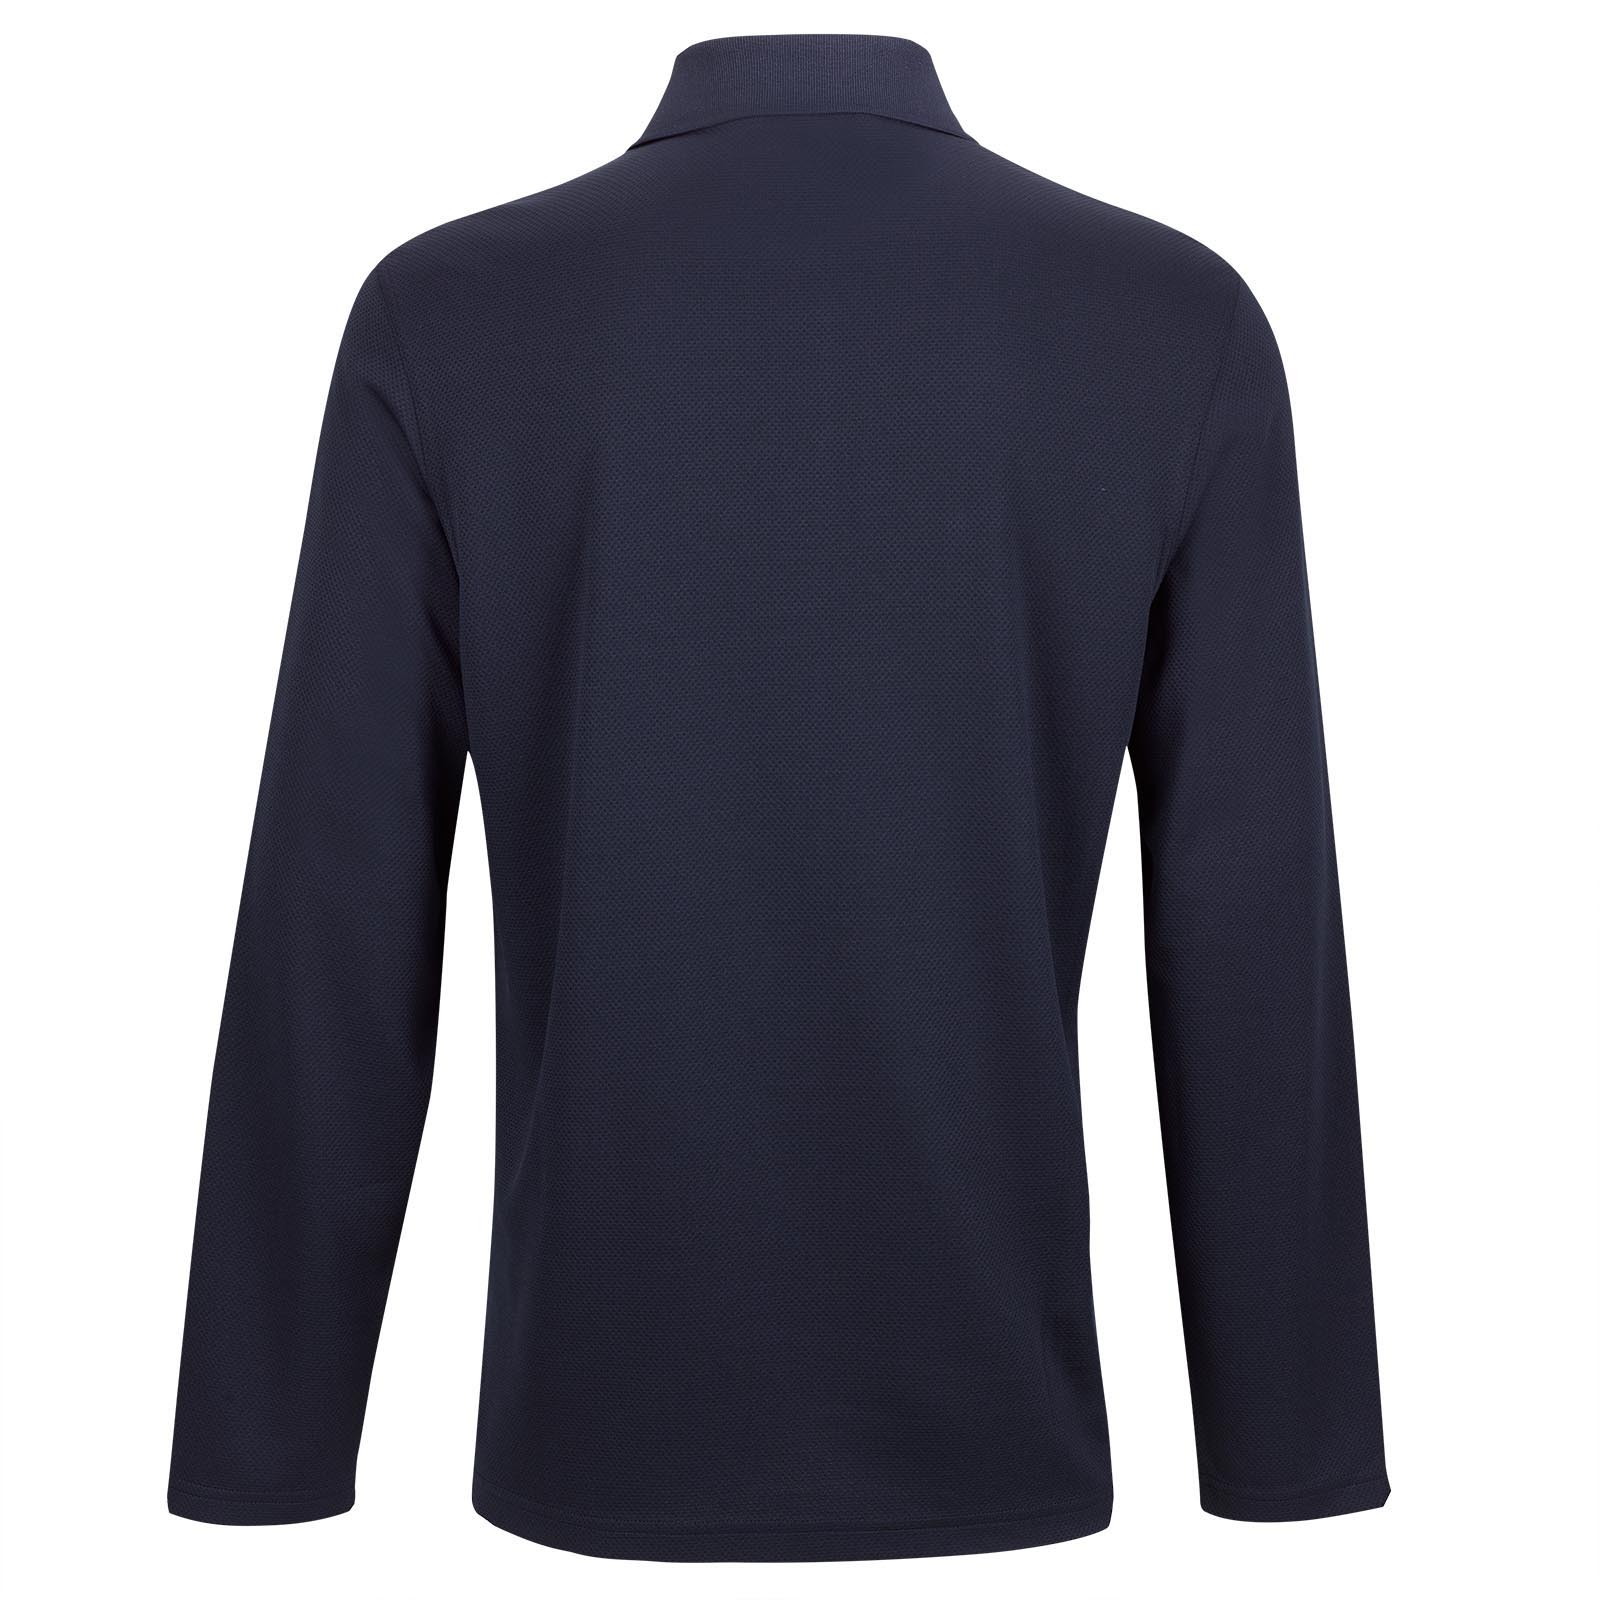 Versatile men's long-sleeved polo shirt